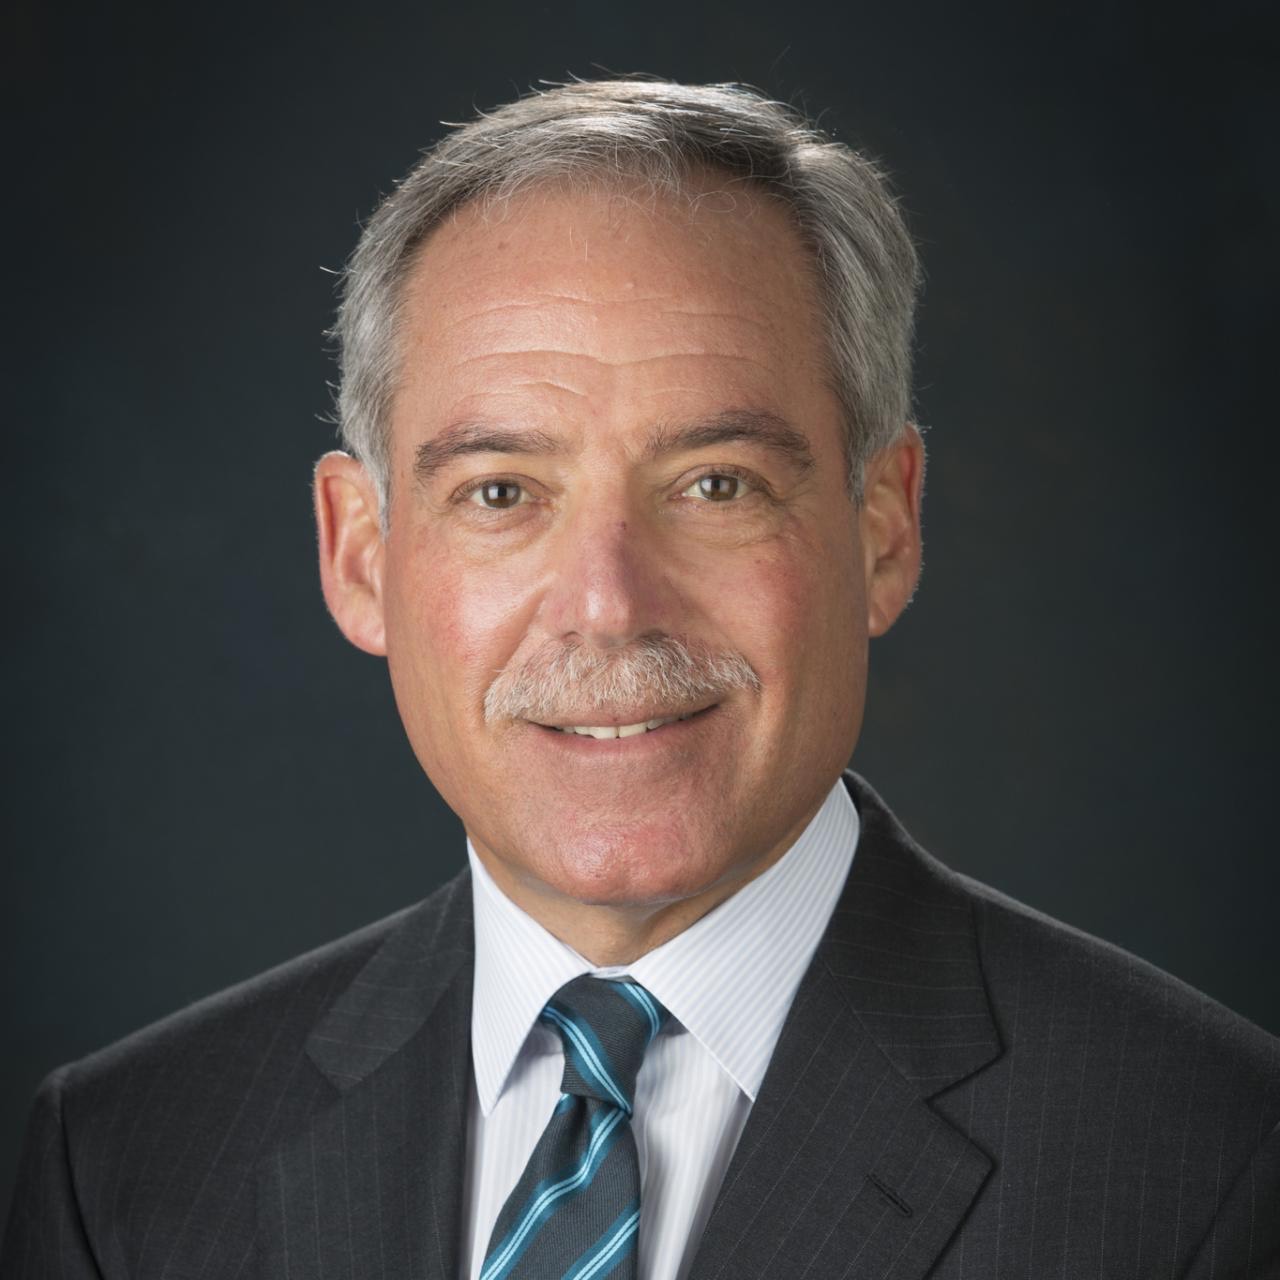 Robert Schottenstein, M/I Homes CEO